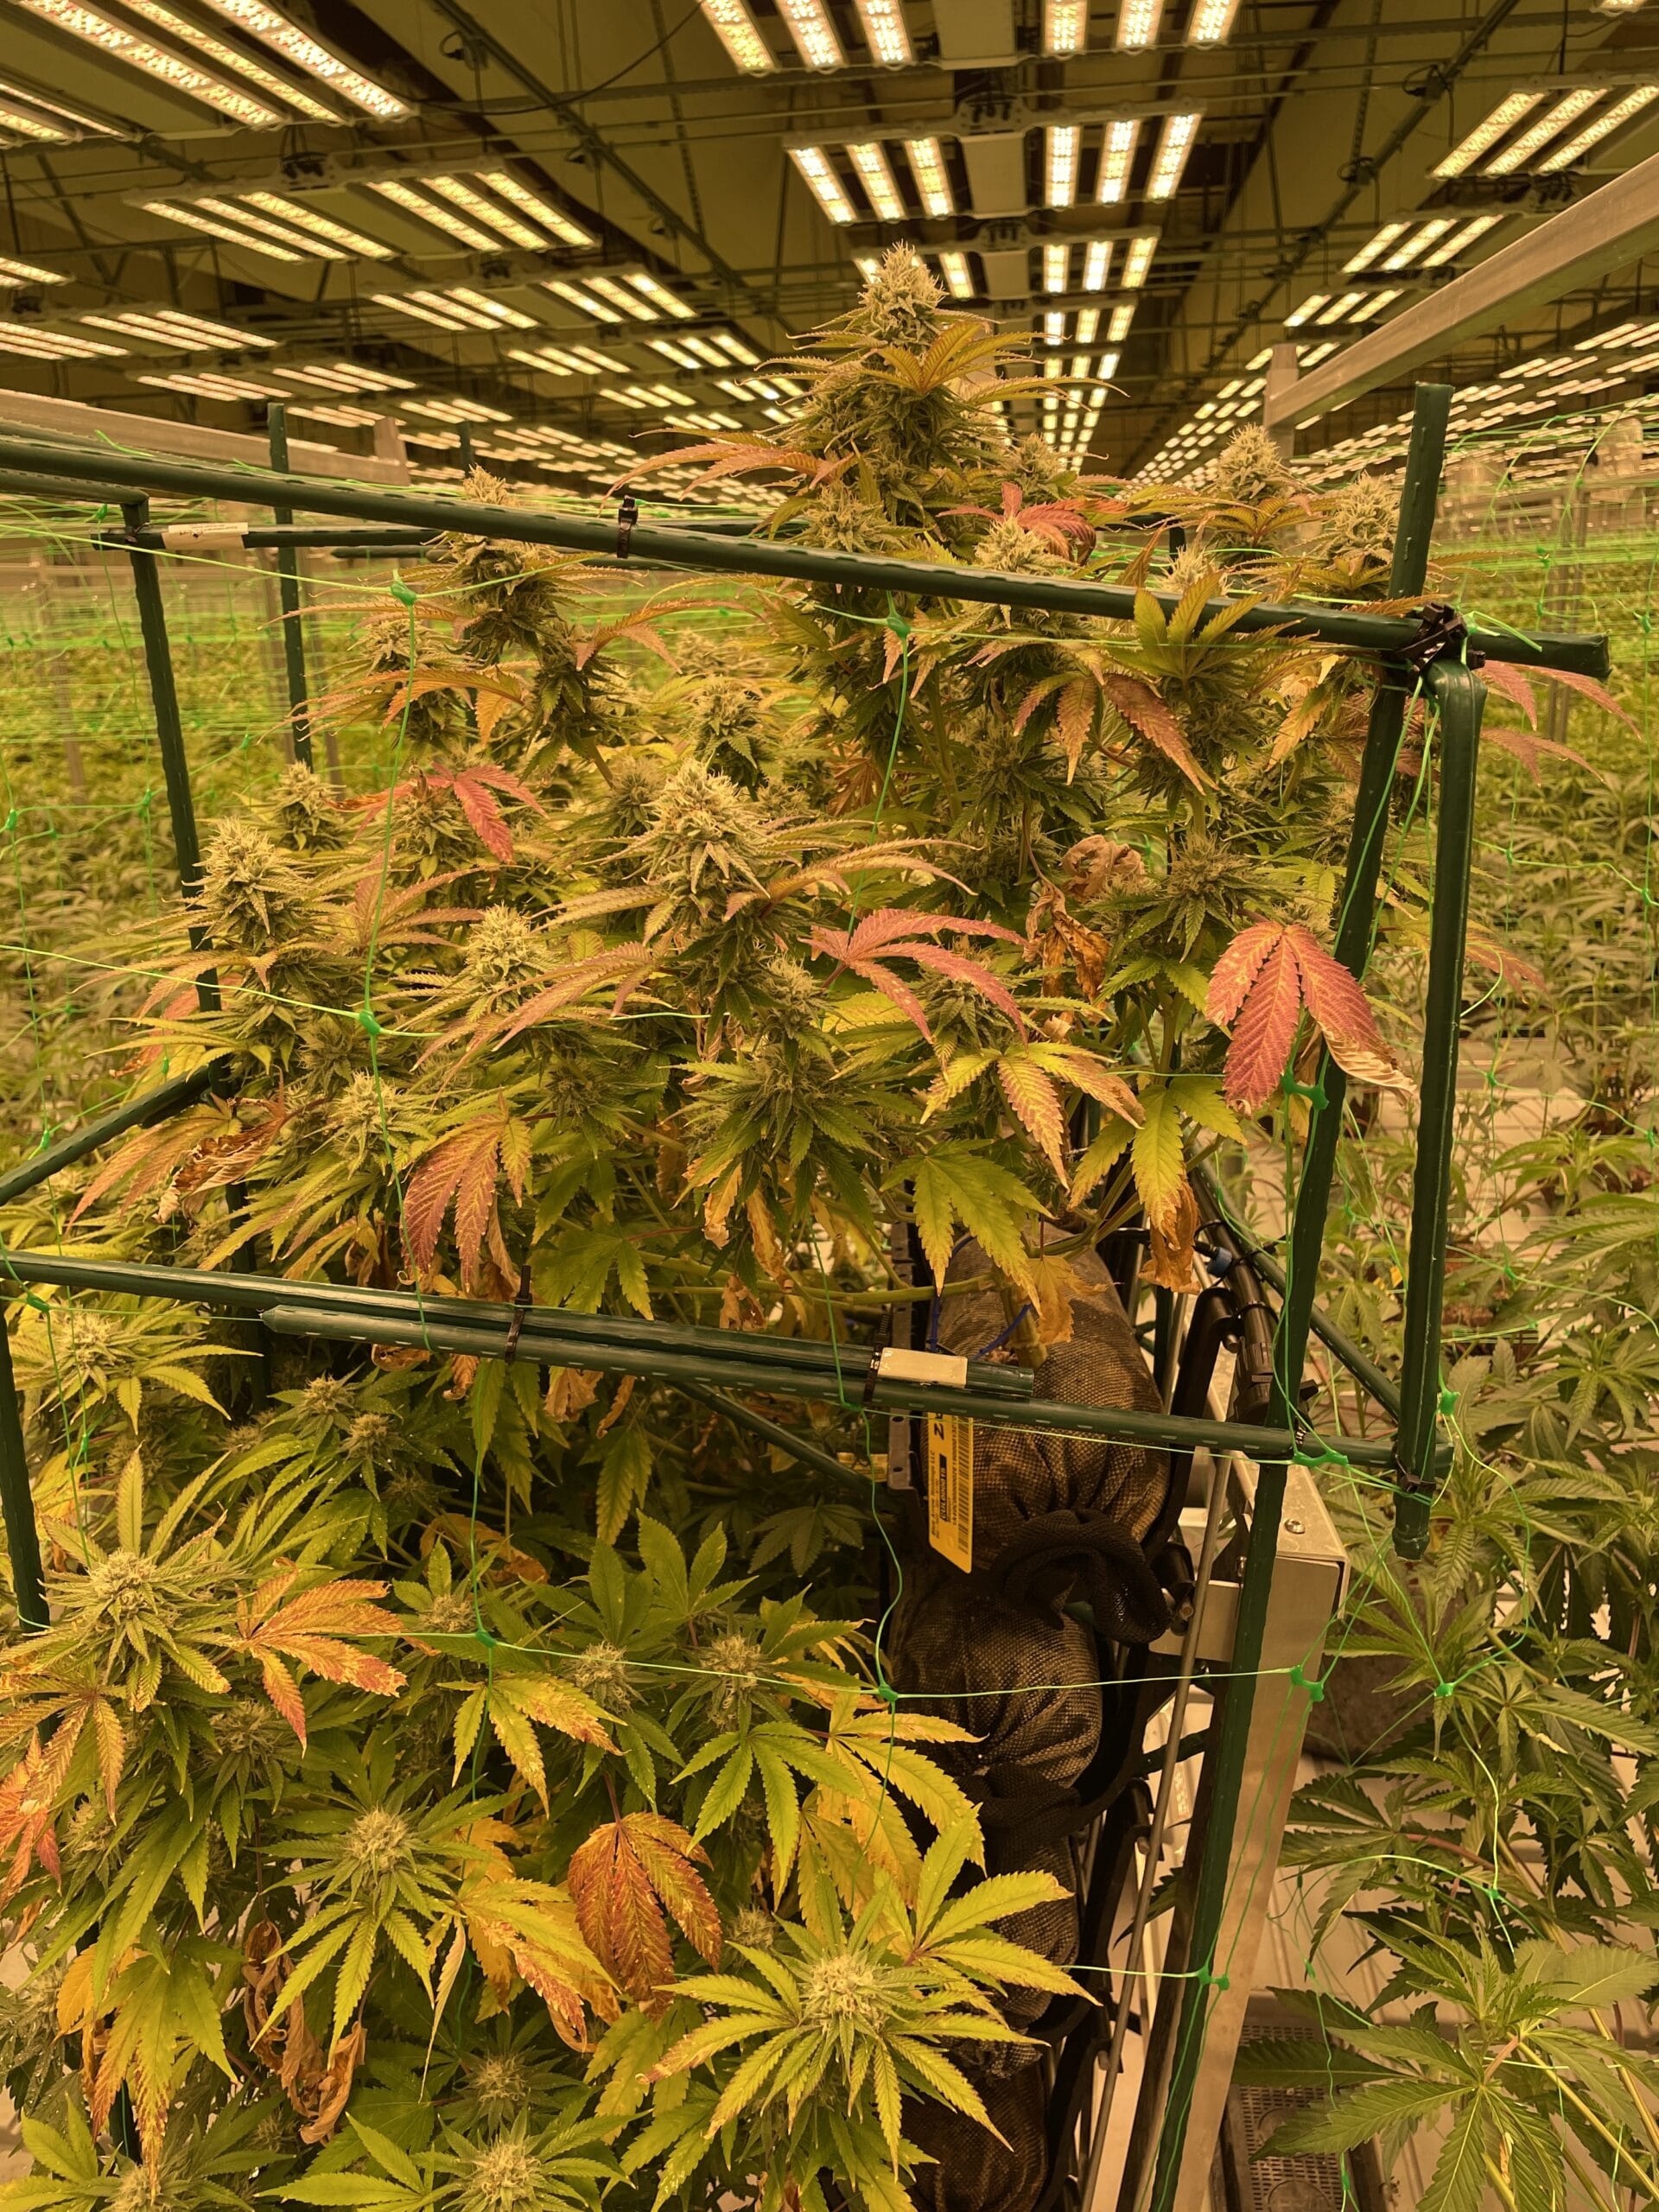 Maturing cannabis plants